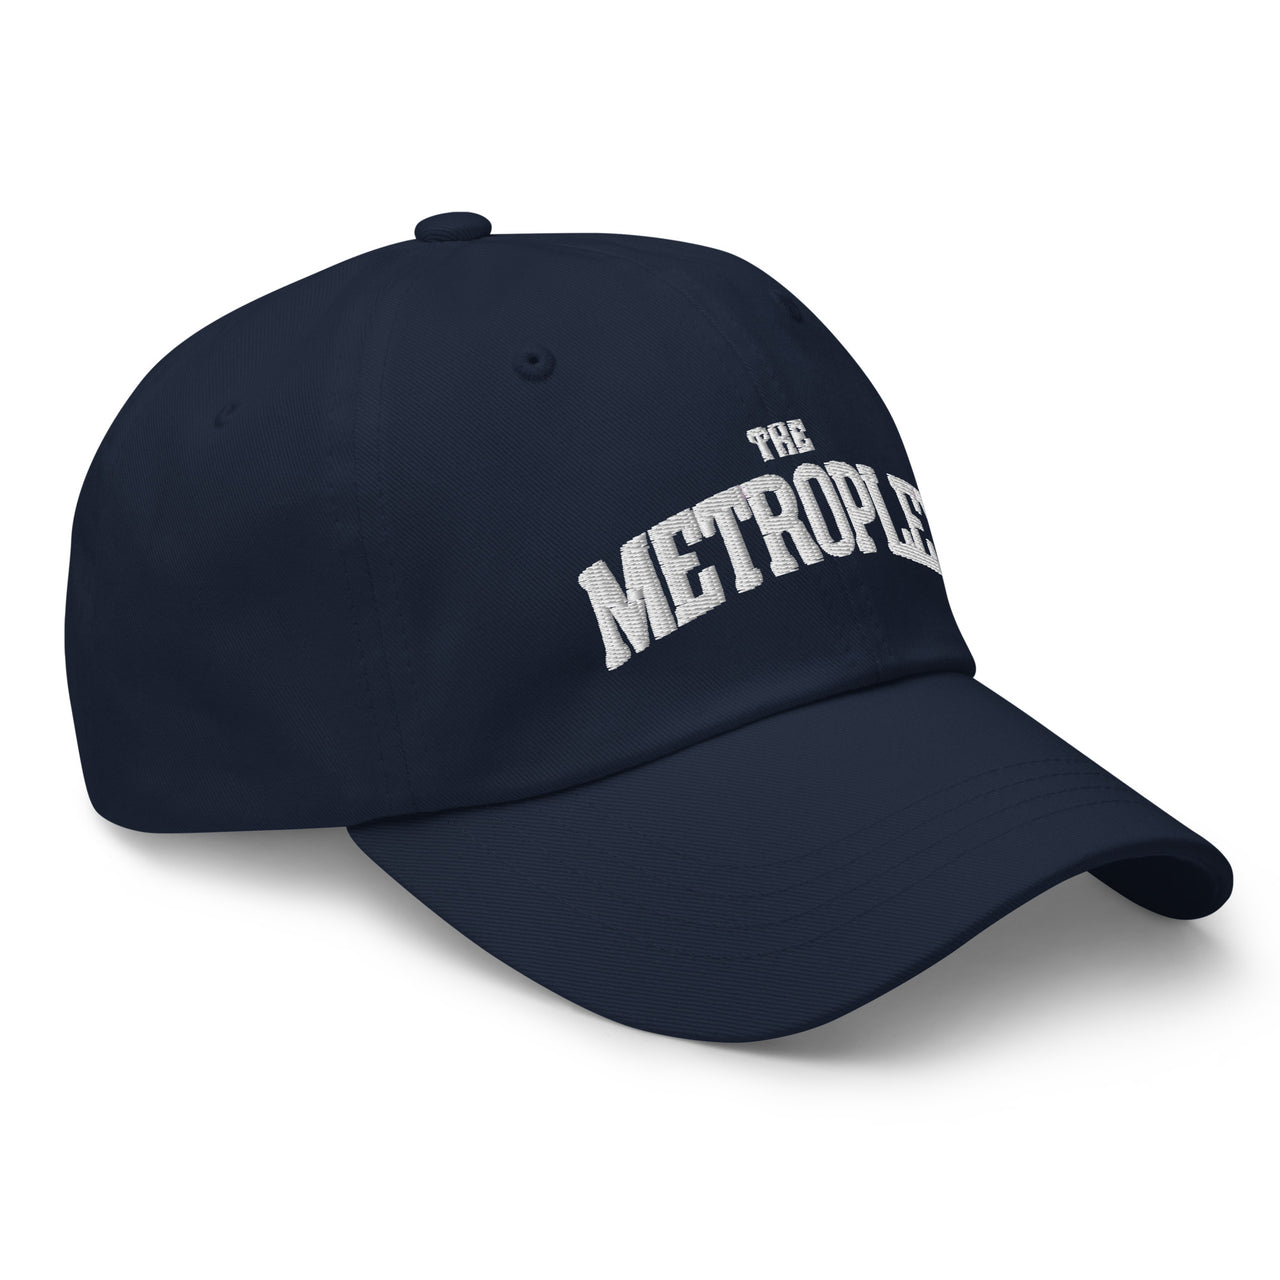 The Metroplex Hat